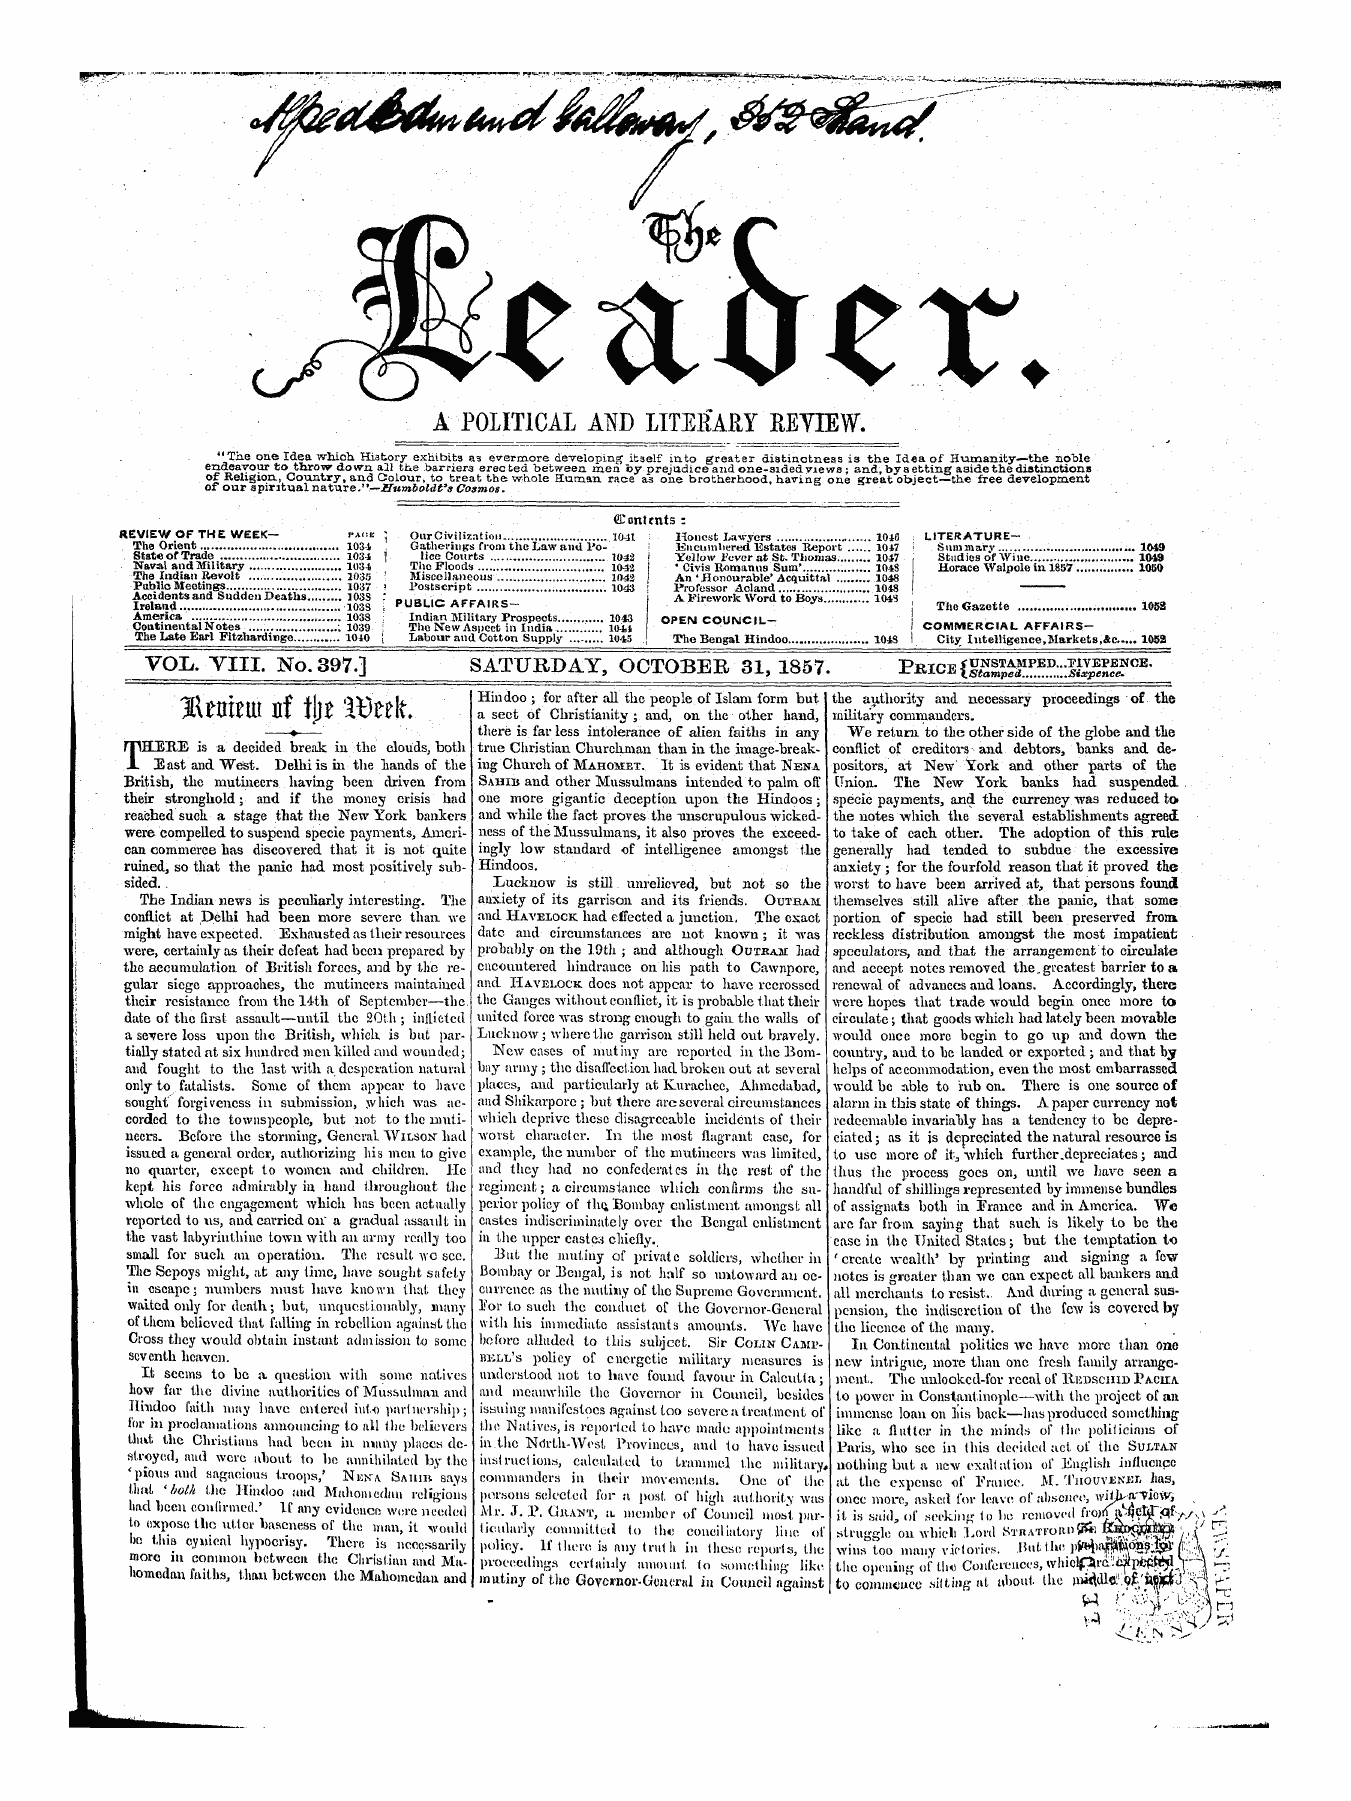 Leader (1850-1860): jS F Y, 1st edition - Ffiontmts : I